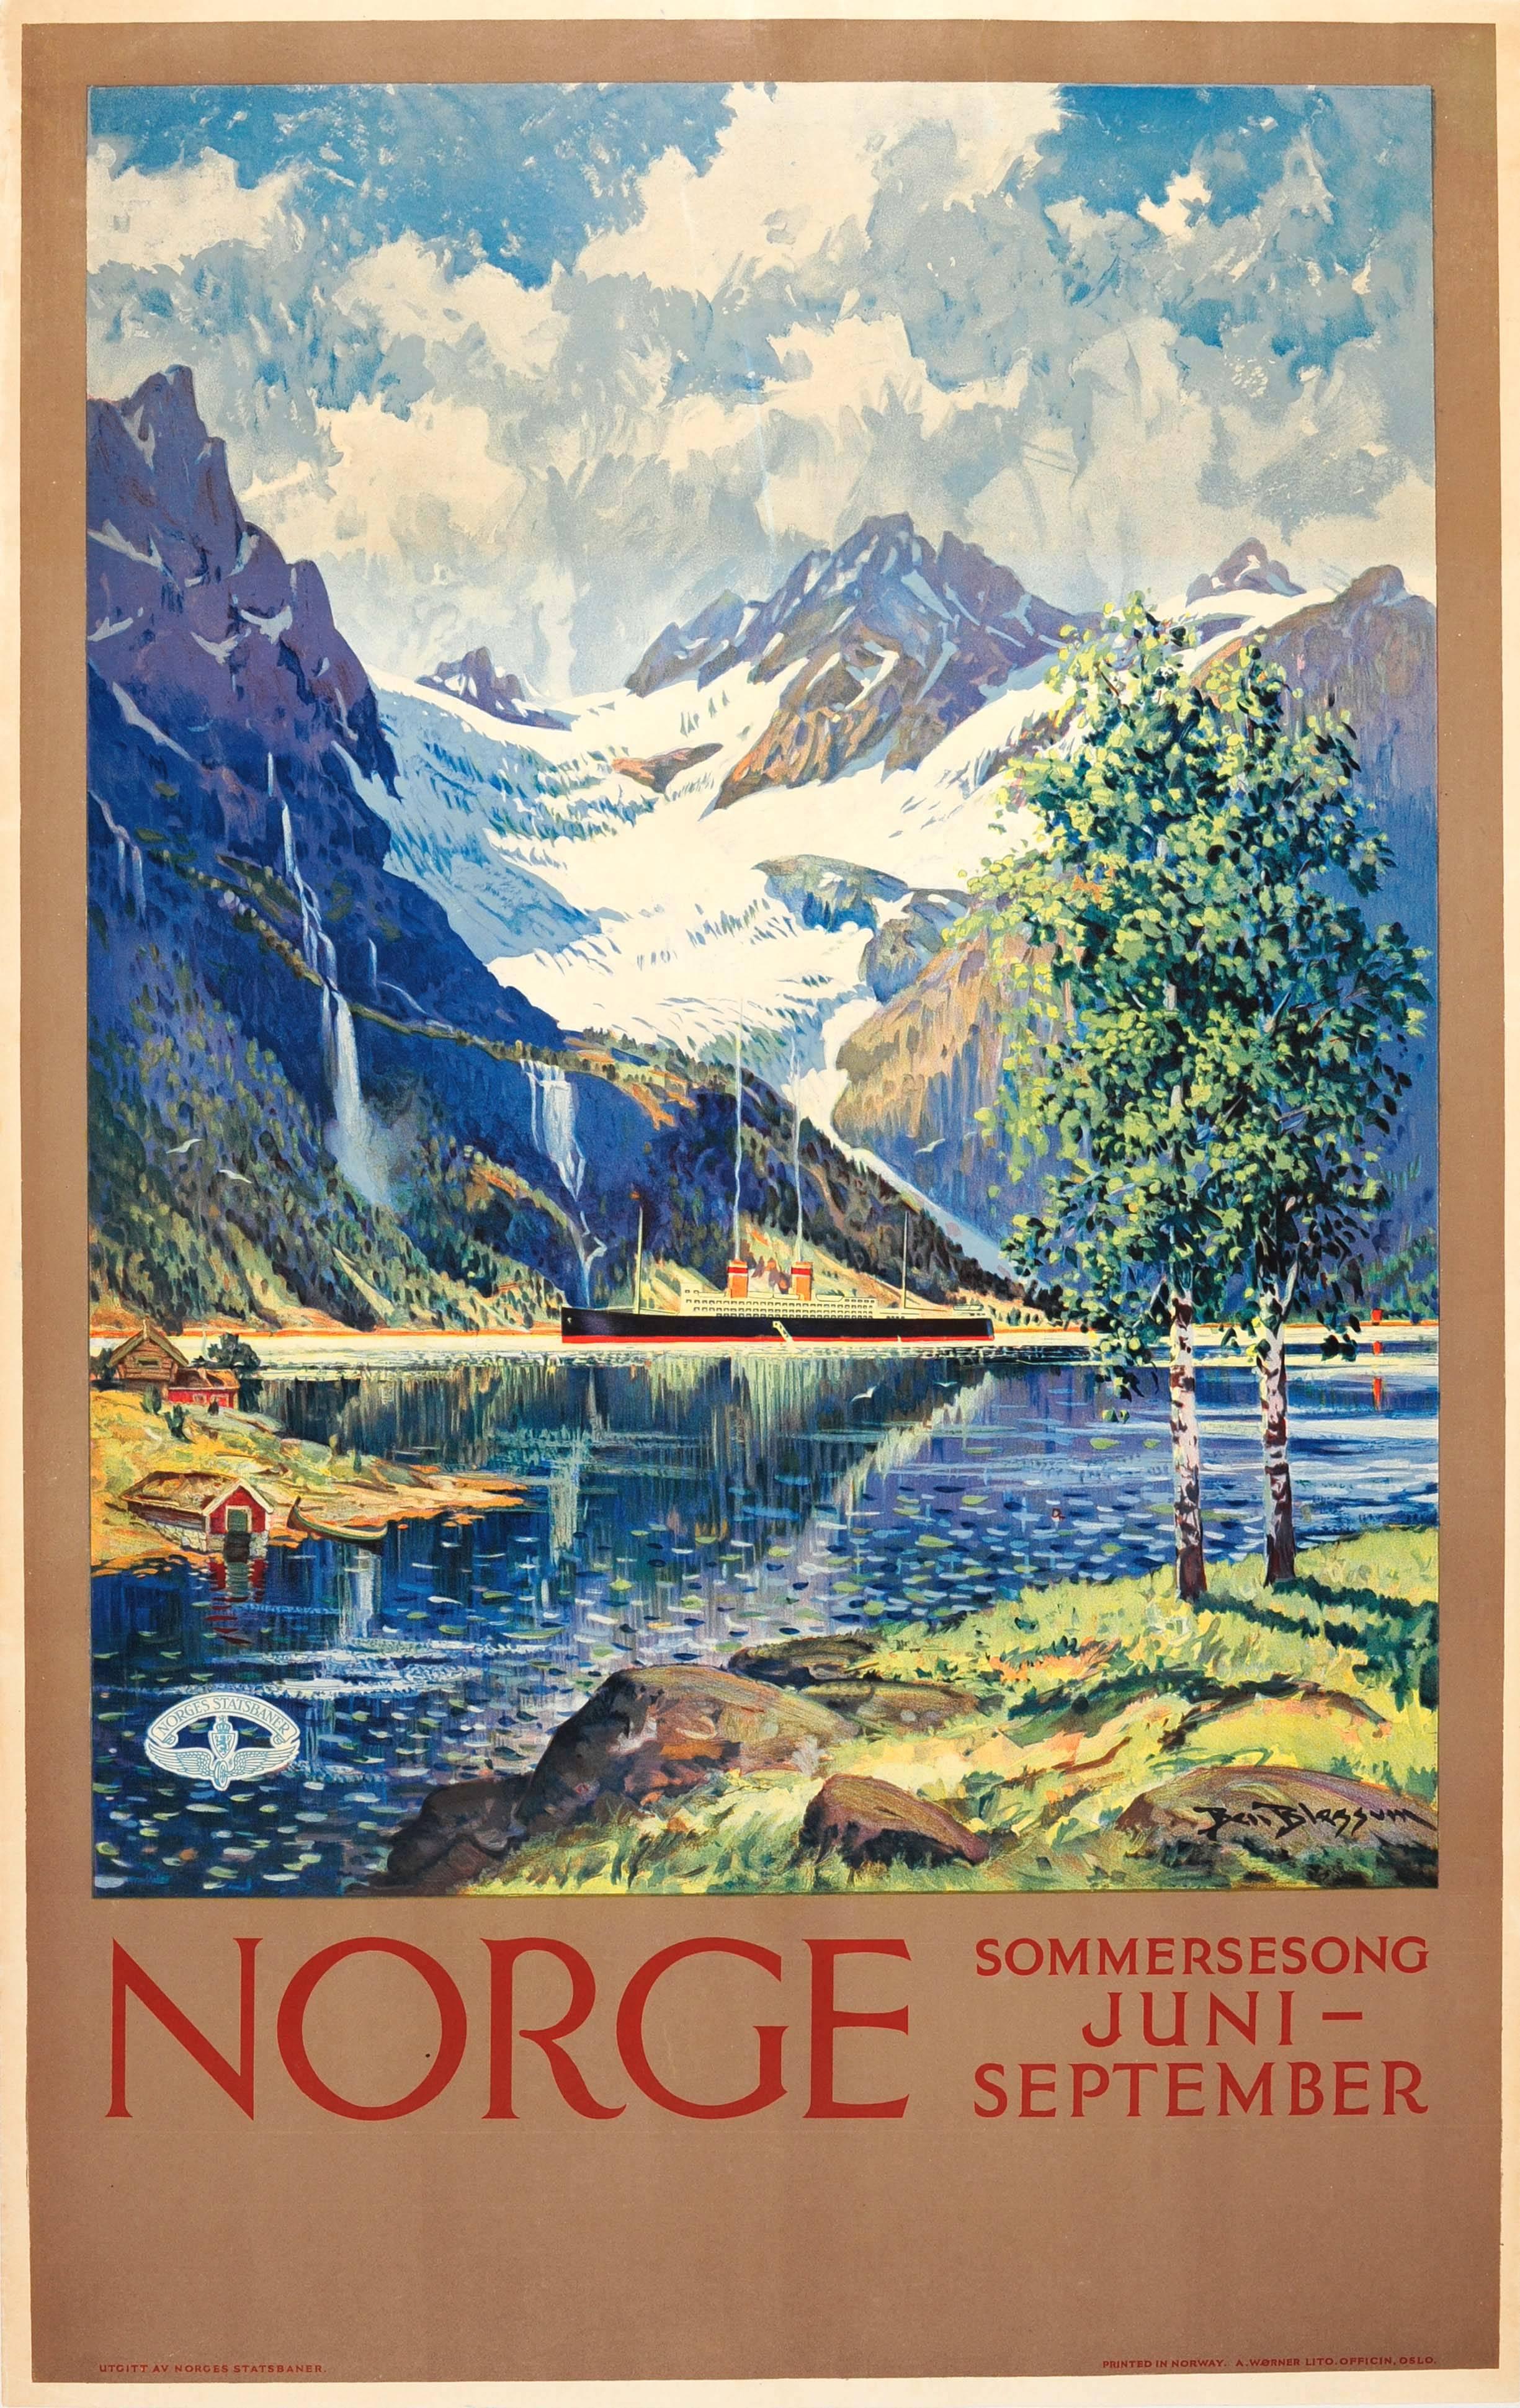 Benjamin Blessum Print - Original Vintage 1920s Railway Travel Advertising Poster: Norway - Summer Song